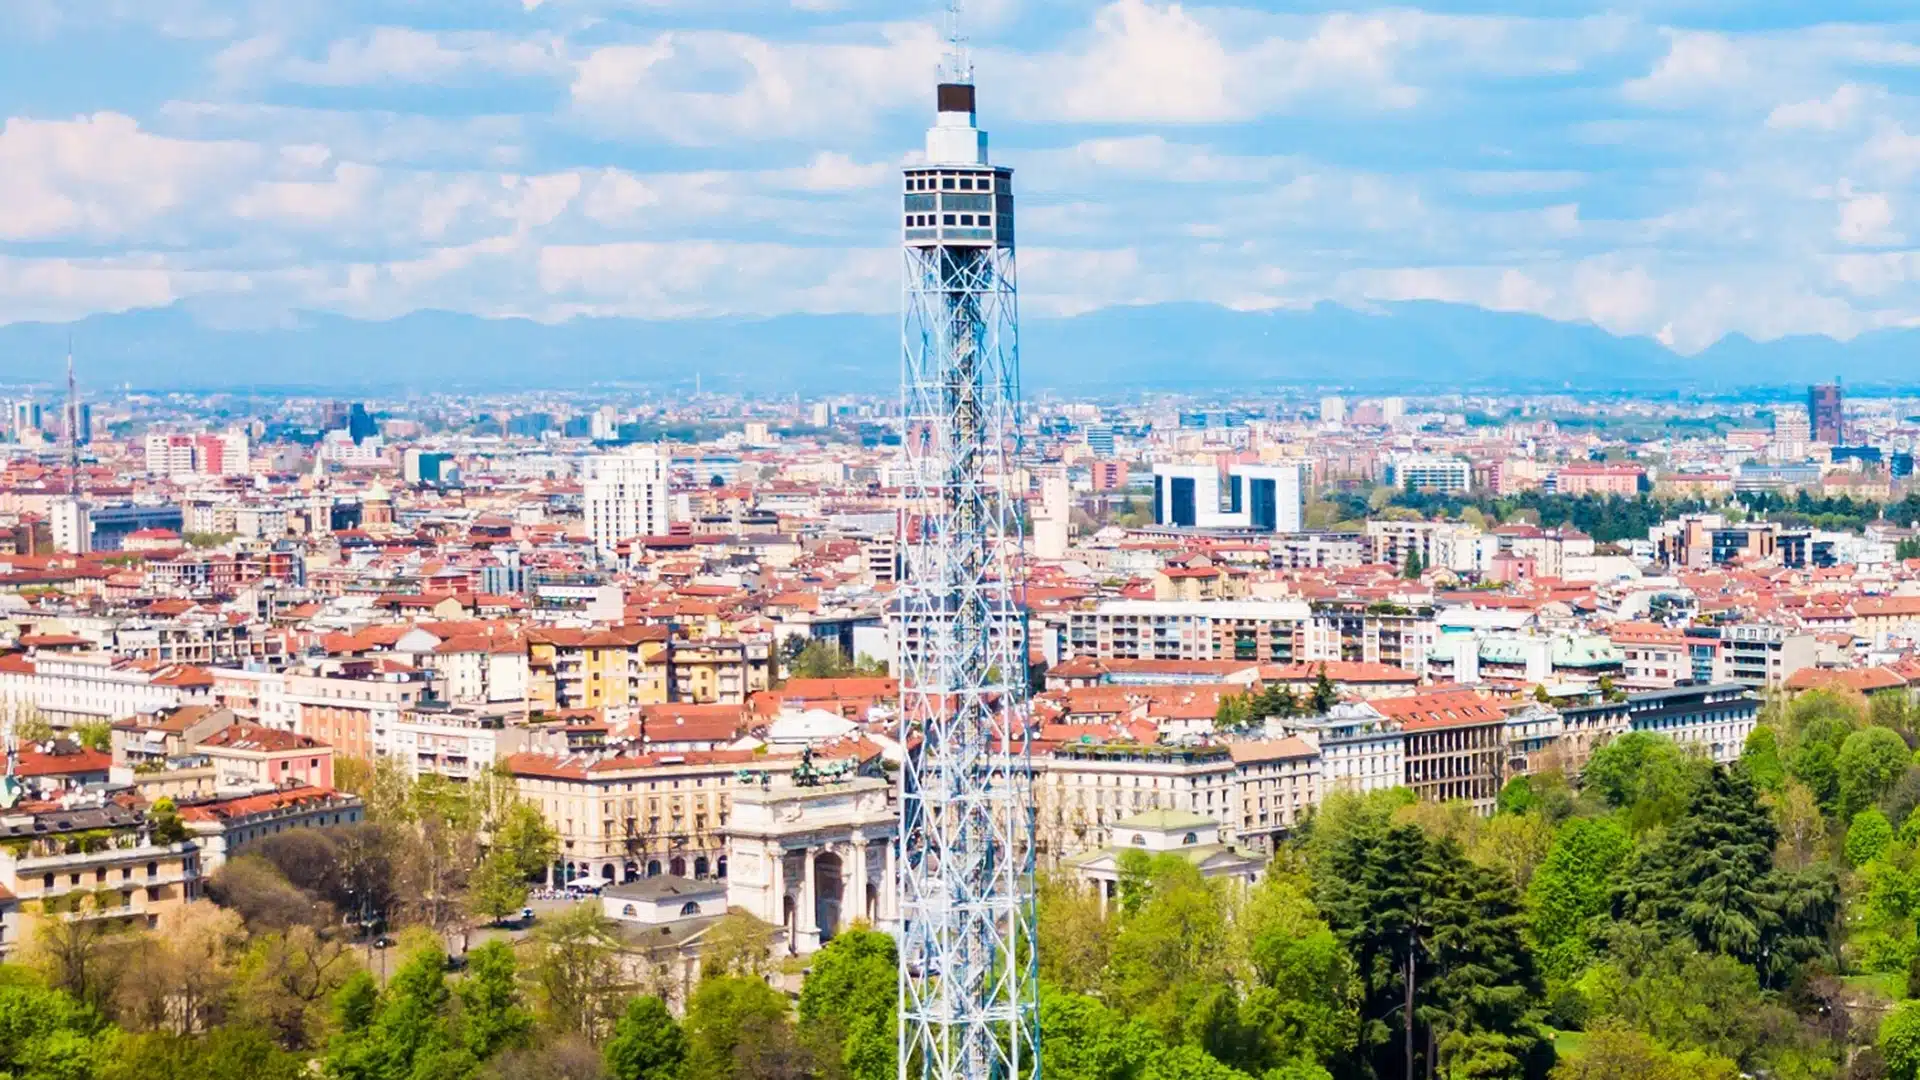 skyline Milano dall'alto - Torre Branca